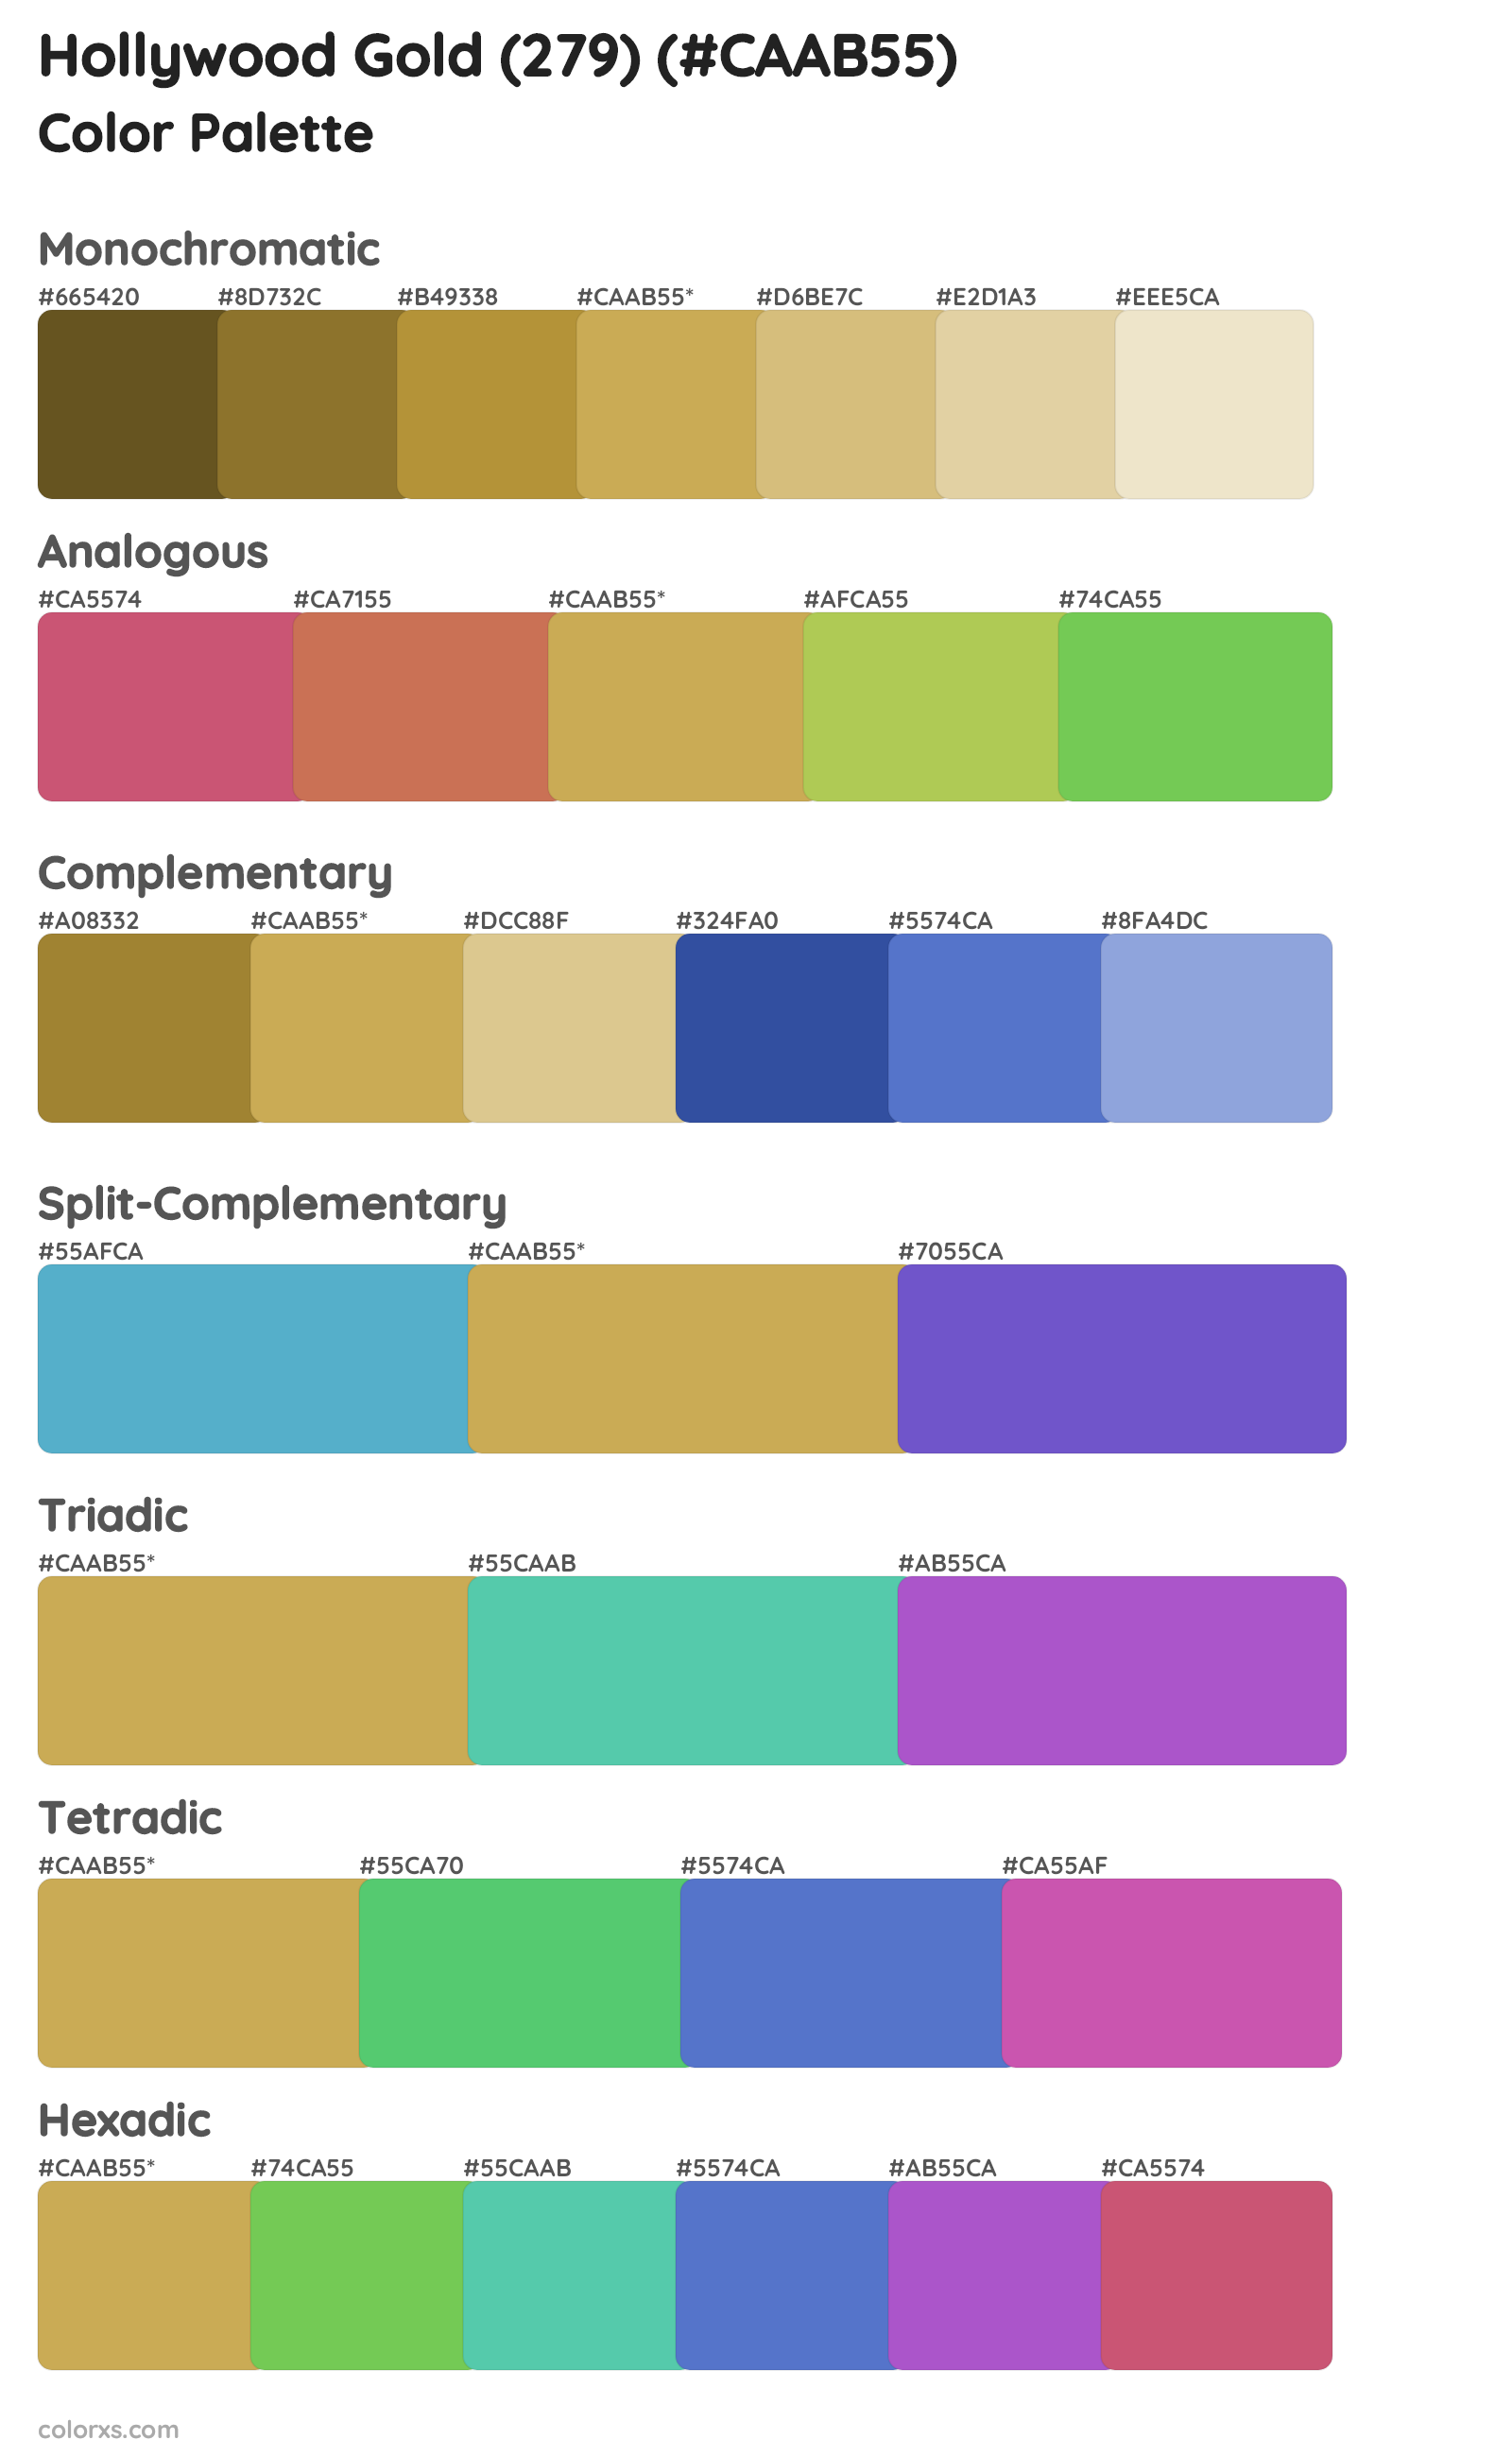 Hollywood Gold (279) Color Scheme Palettes